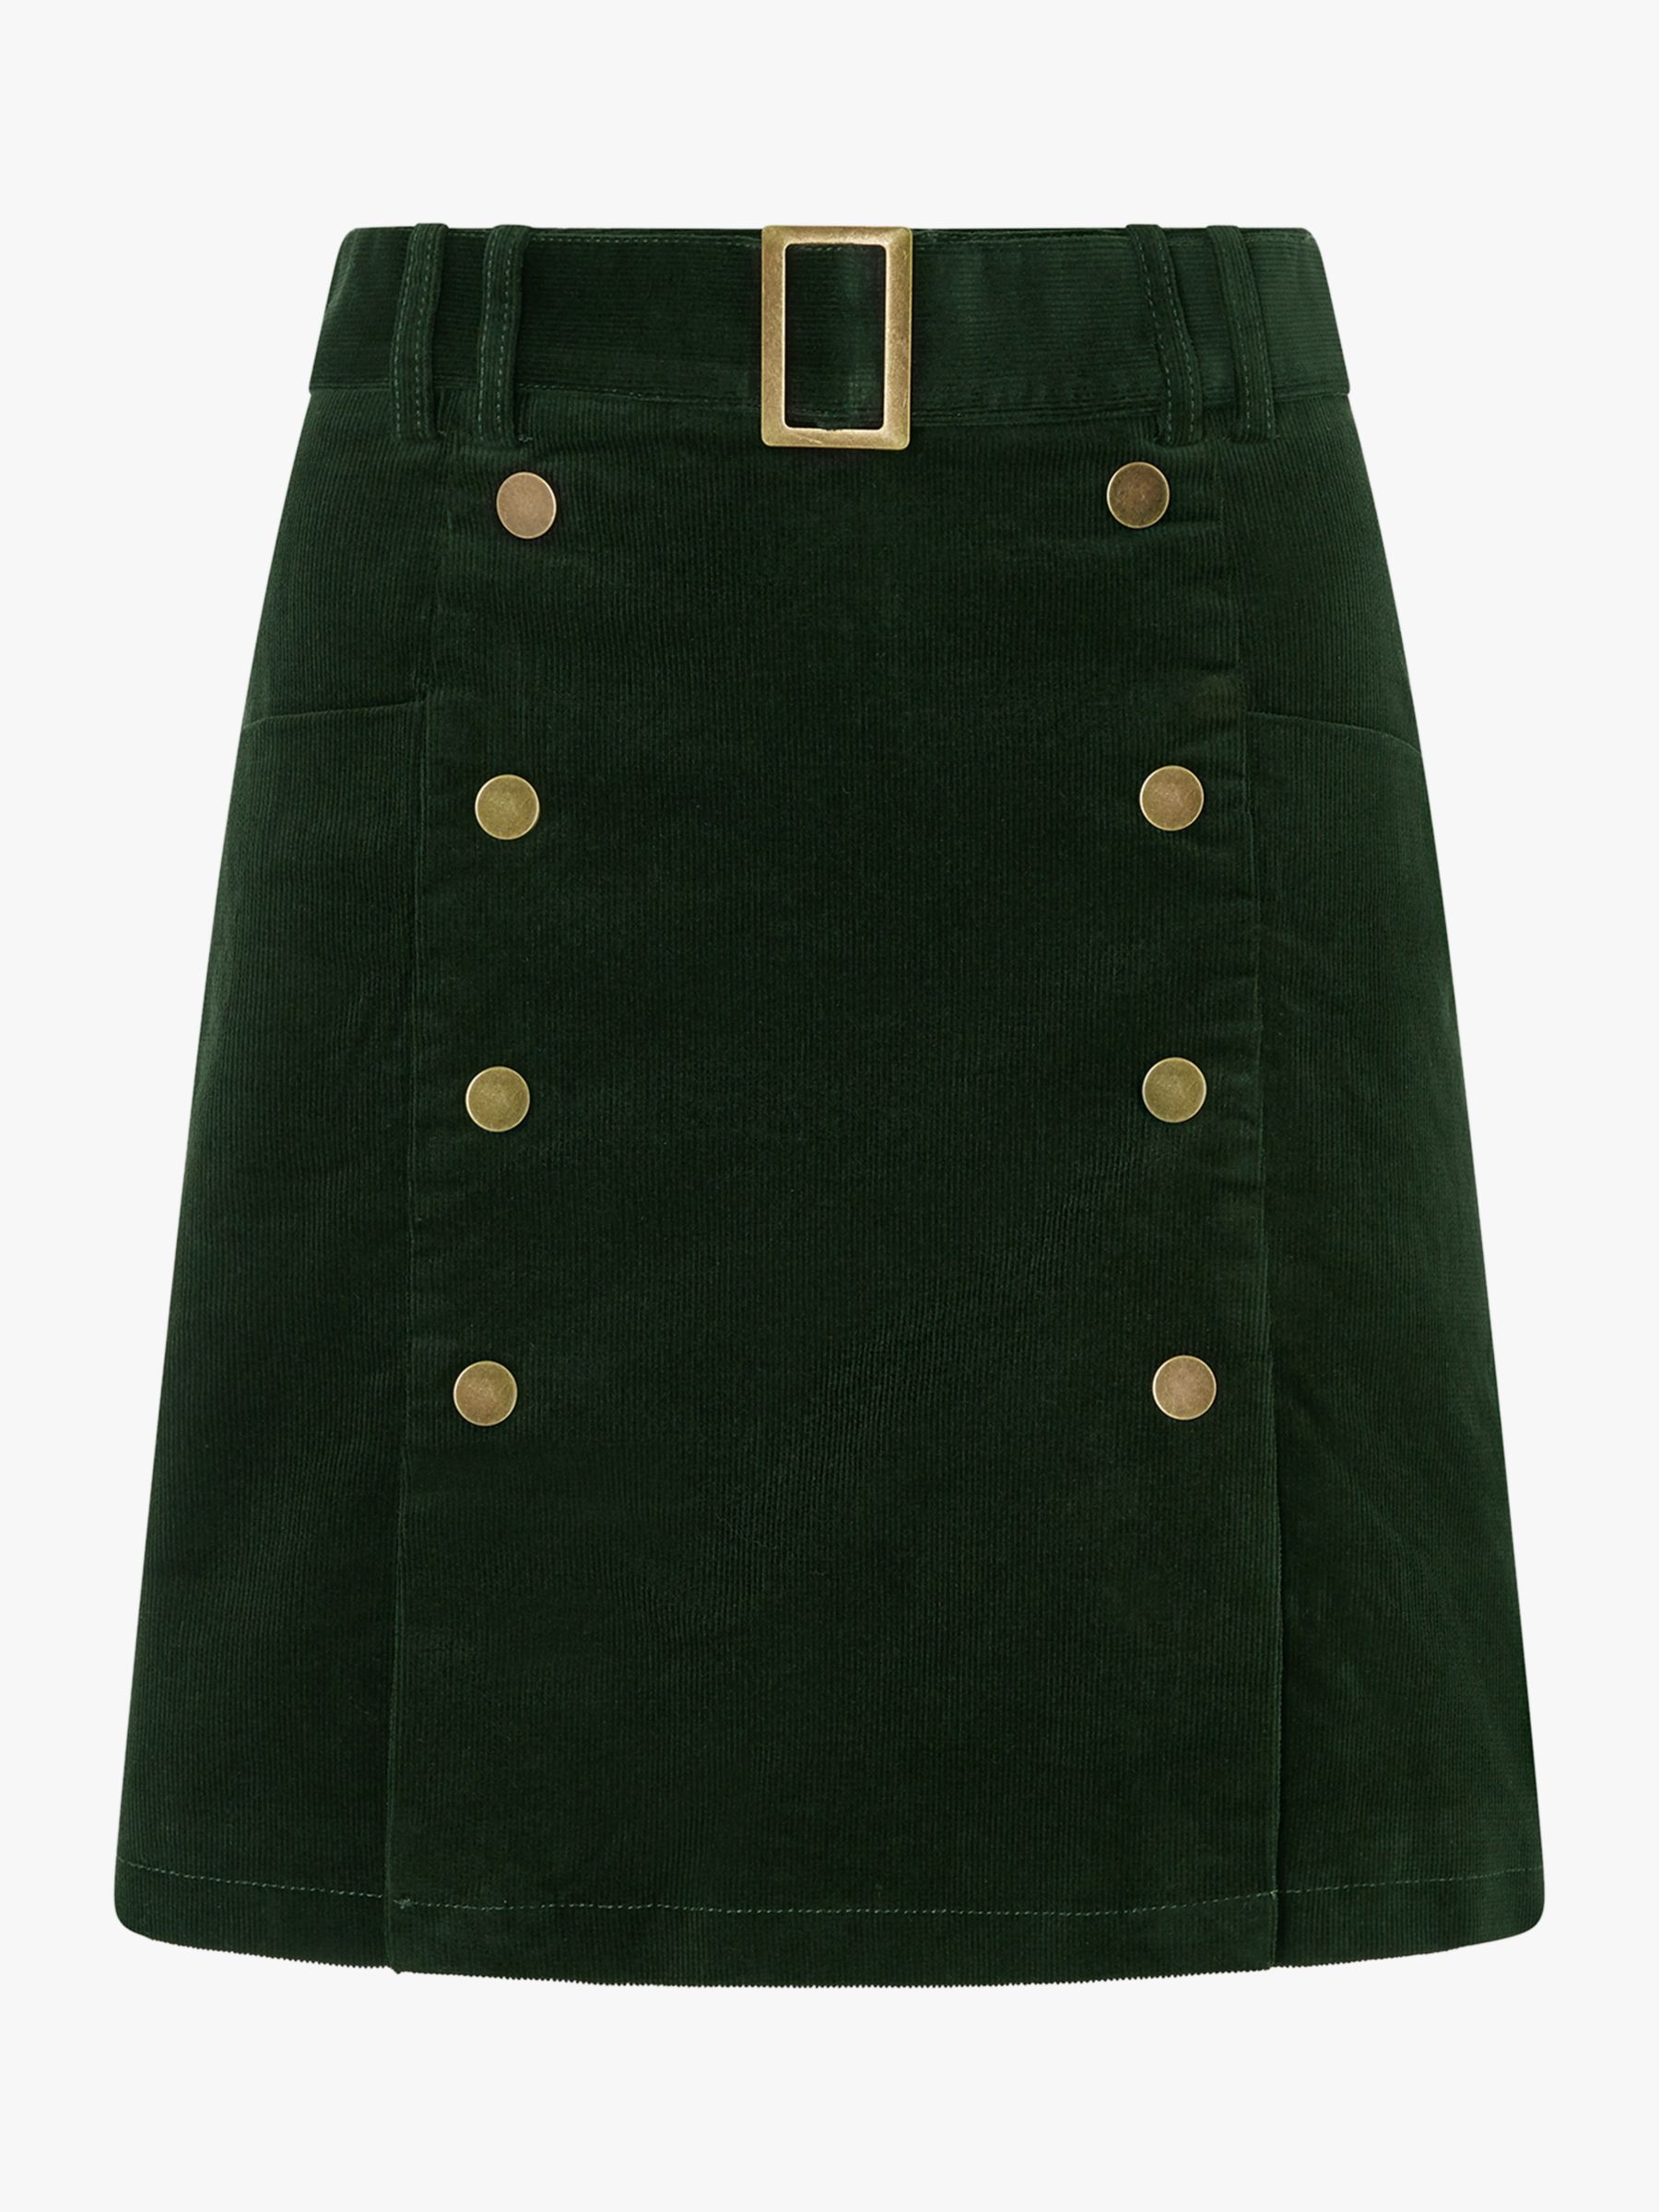 Monsoon Libby Cord Skirt, Olive